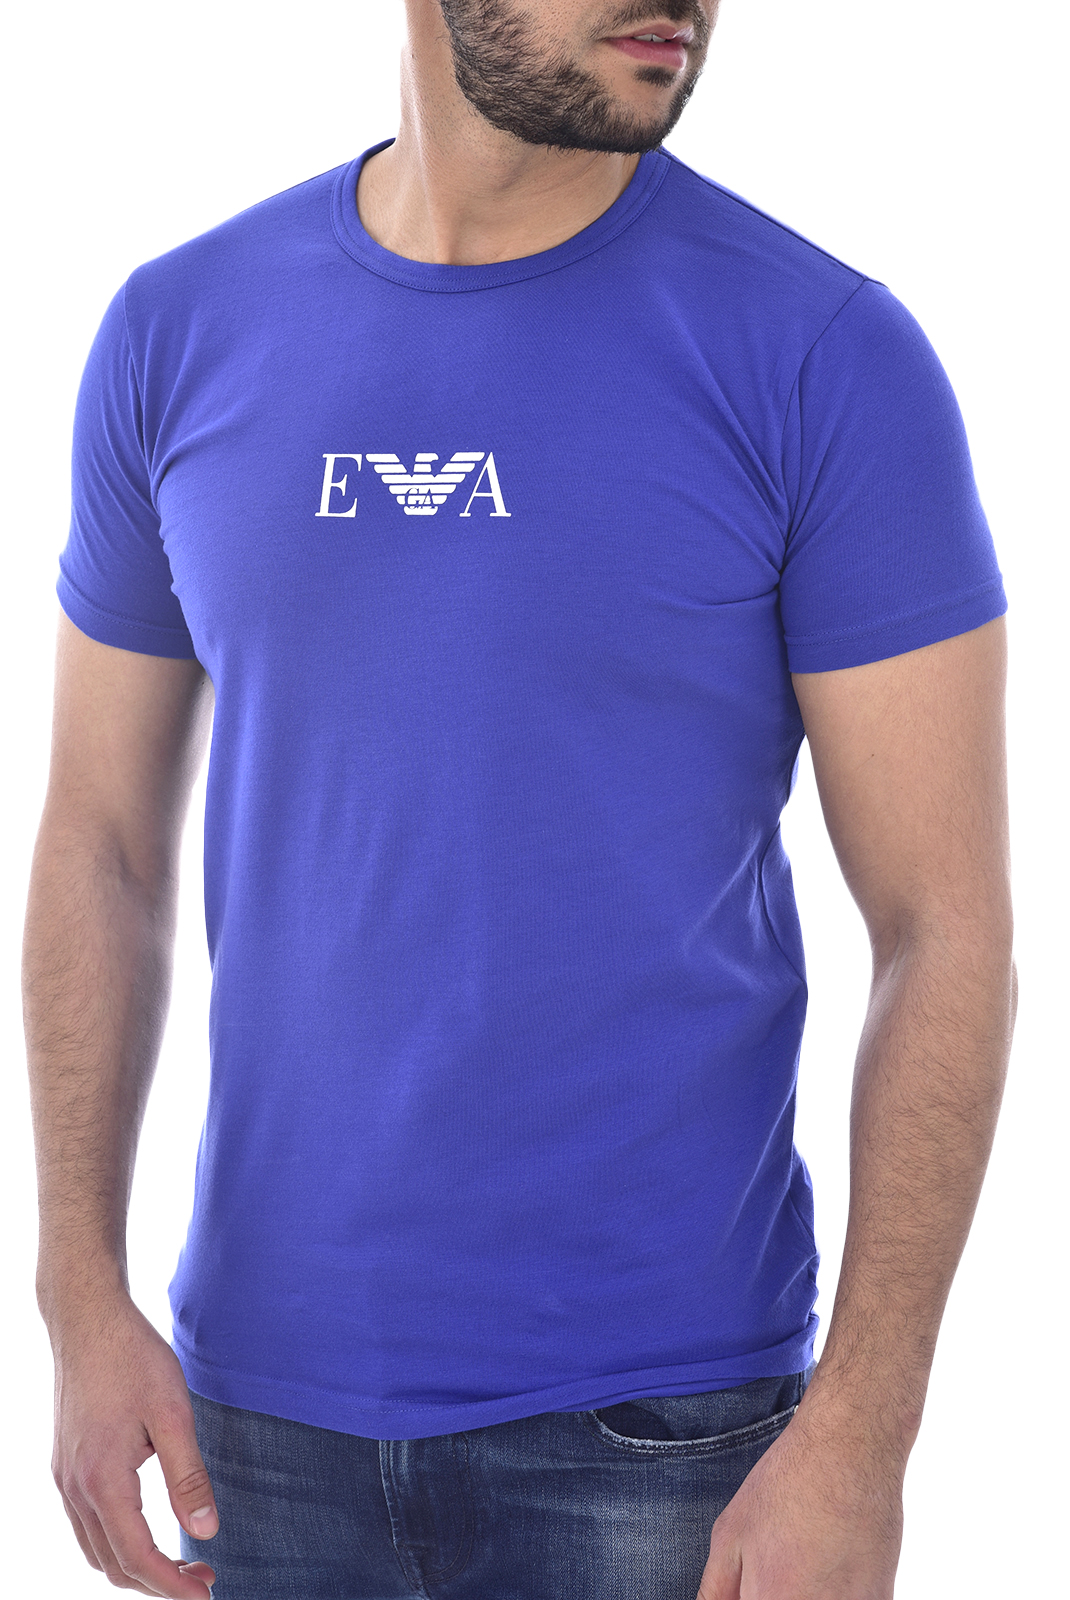 Tee-shirt bleu elet Emporio Armani - 111267